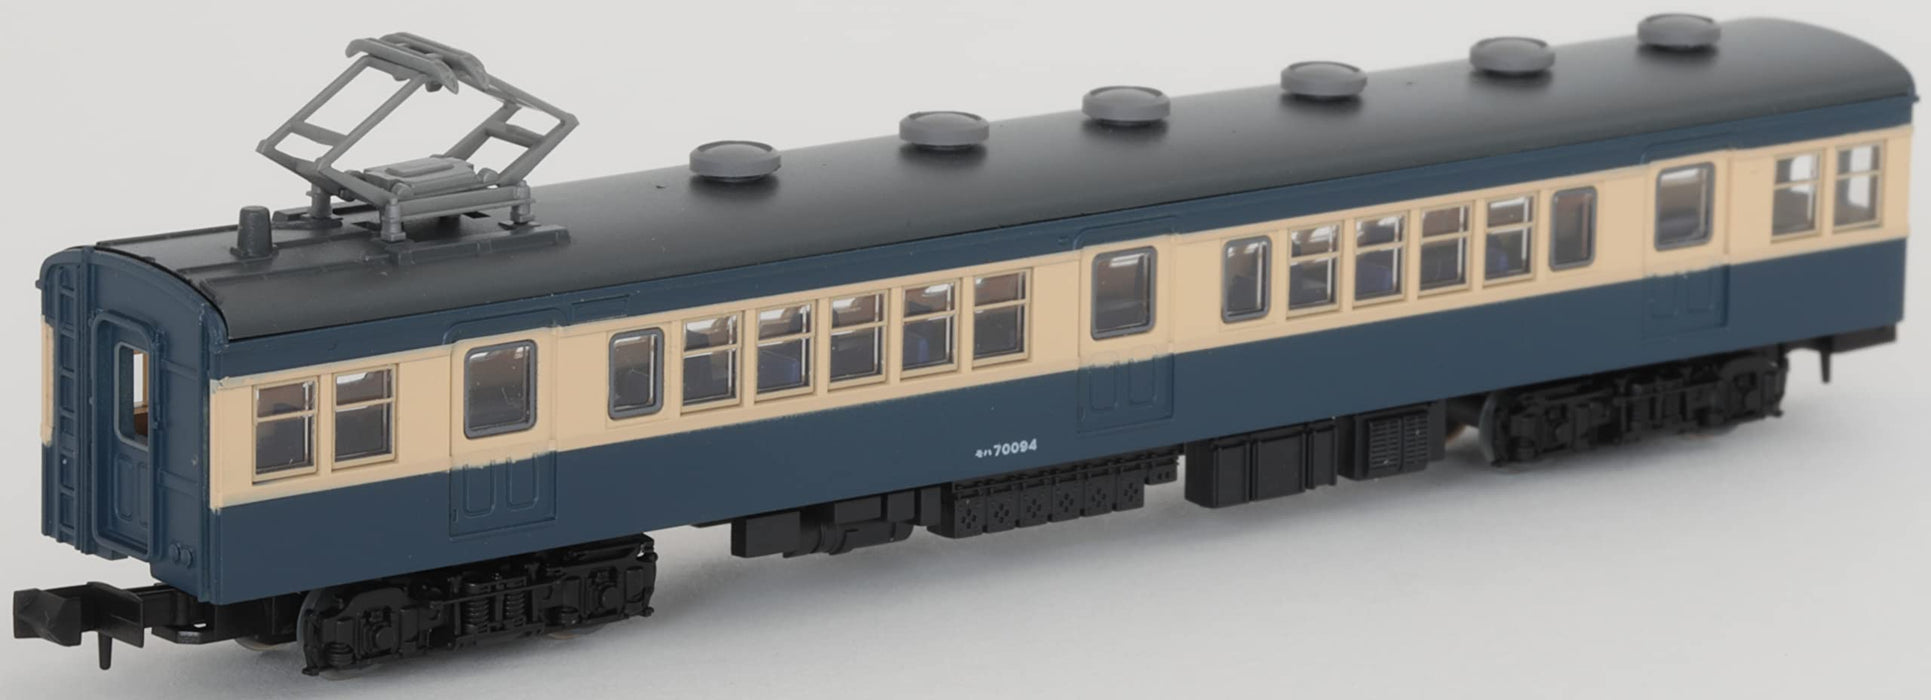 Tomytec Japan Railway Collection Jnr Series 70 Ryomo Line 4 Car Set Diorama Supplies Blue 316435